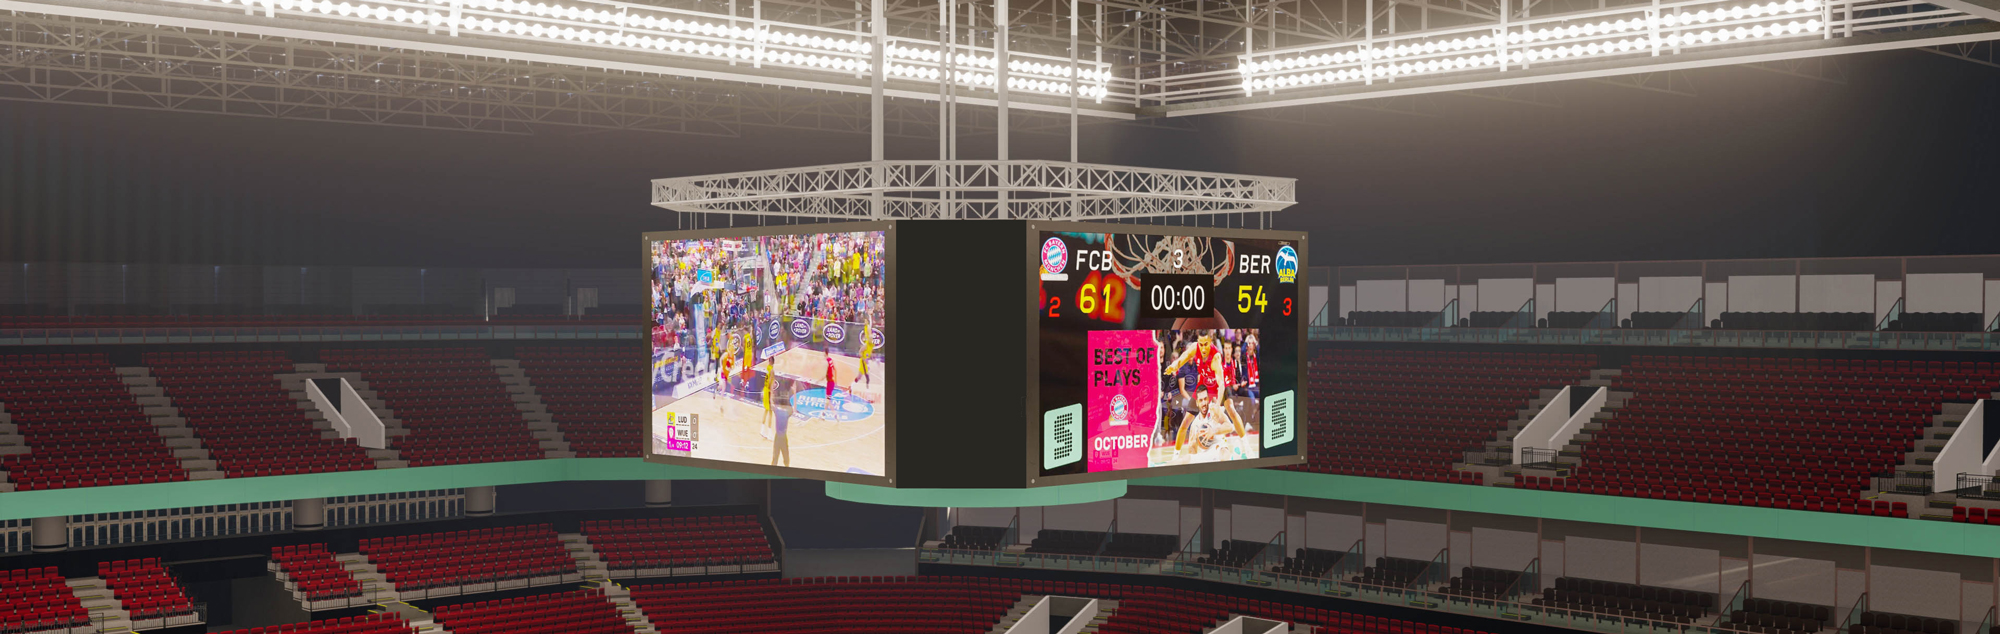 Videowürfel_im-Basketballstadion